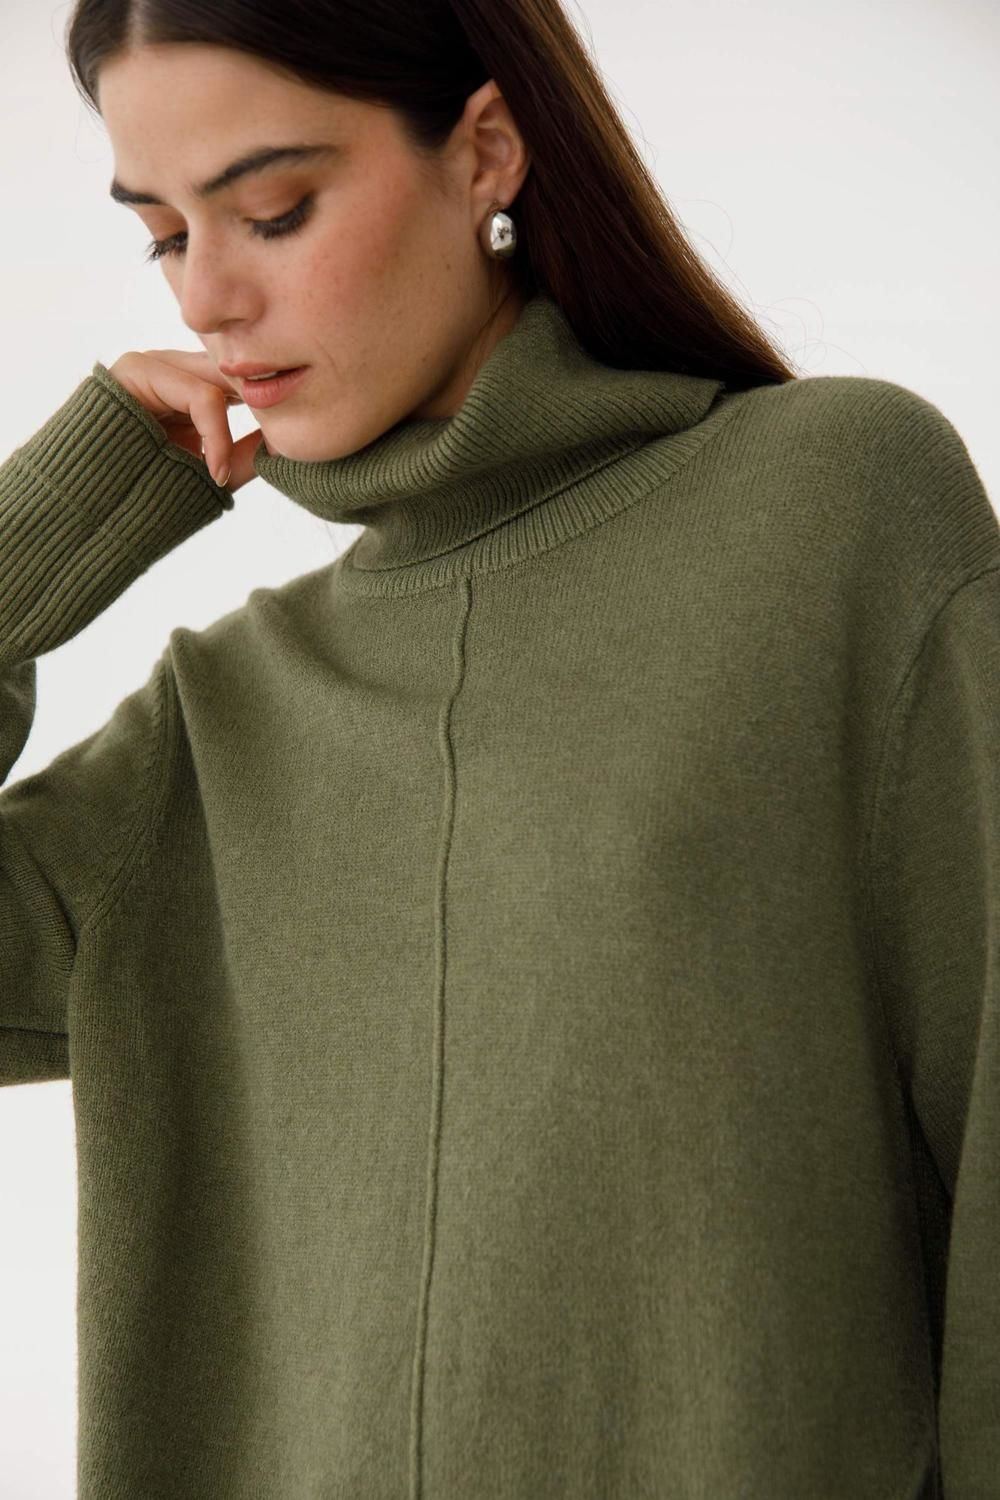 Sweater Polera Serrana